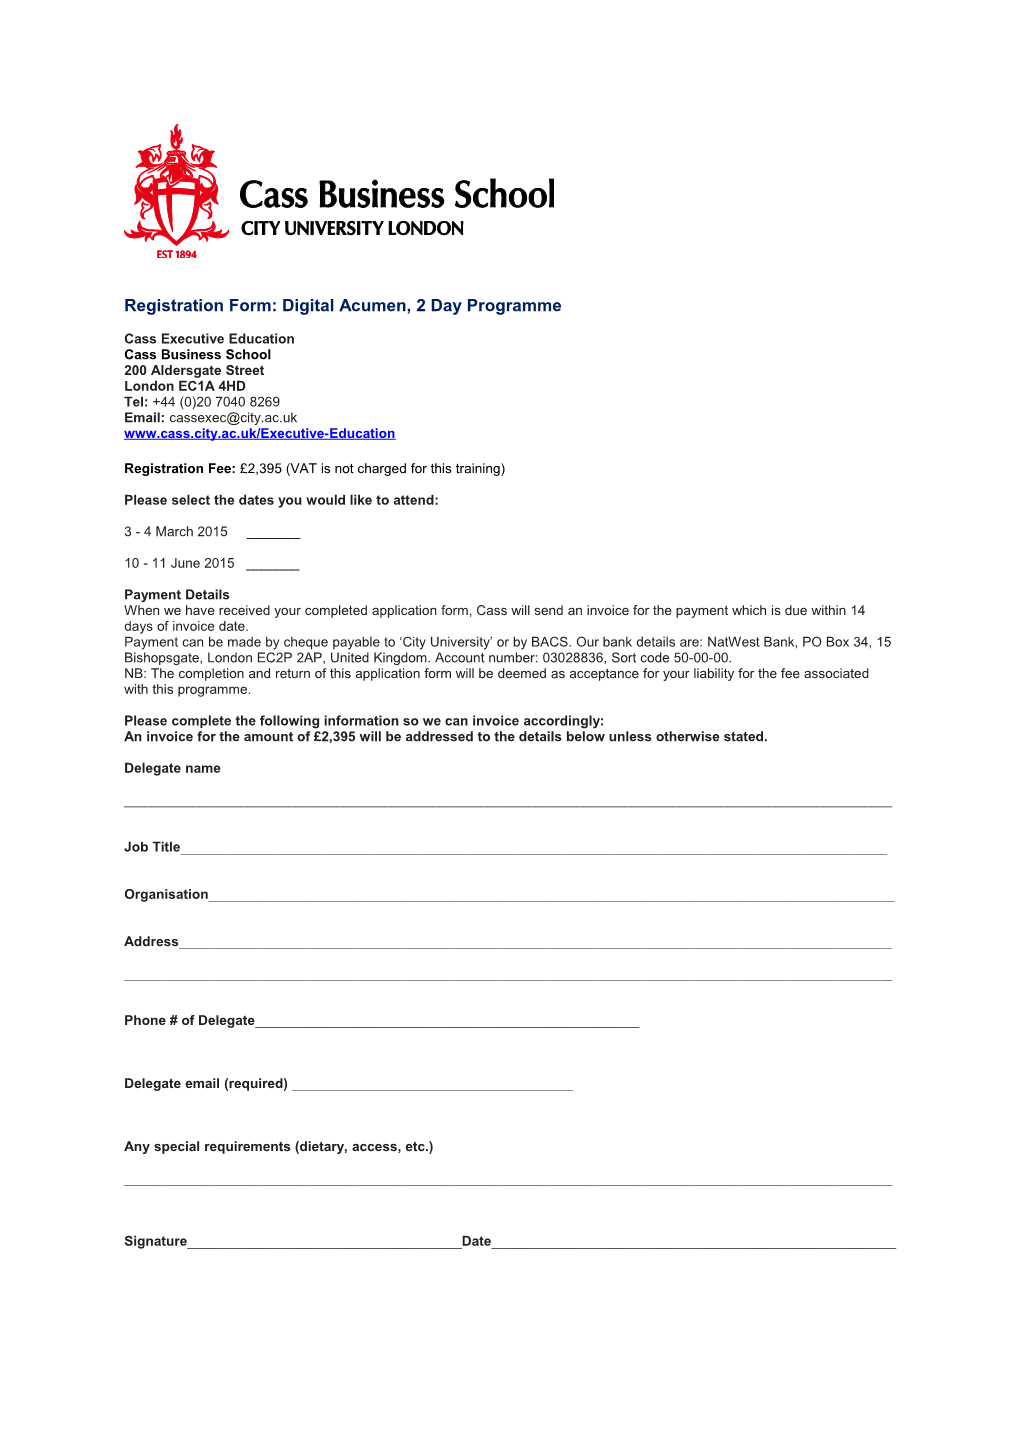 Registration Form: Digital Acumen, 2 Day Programme